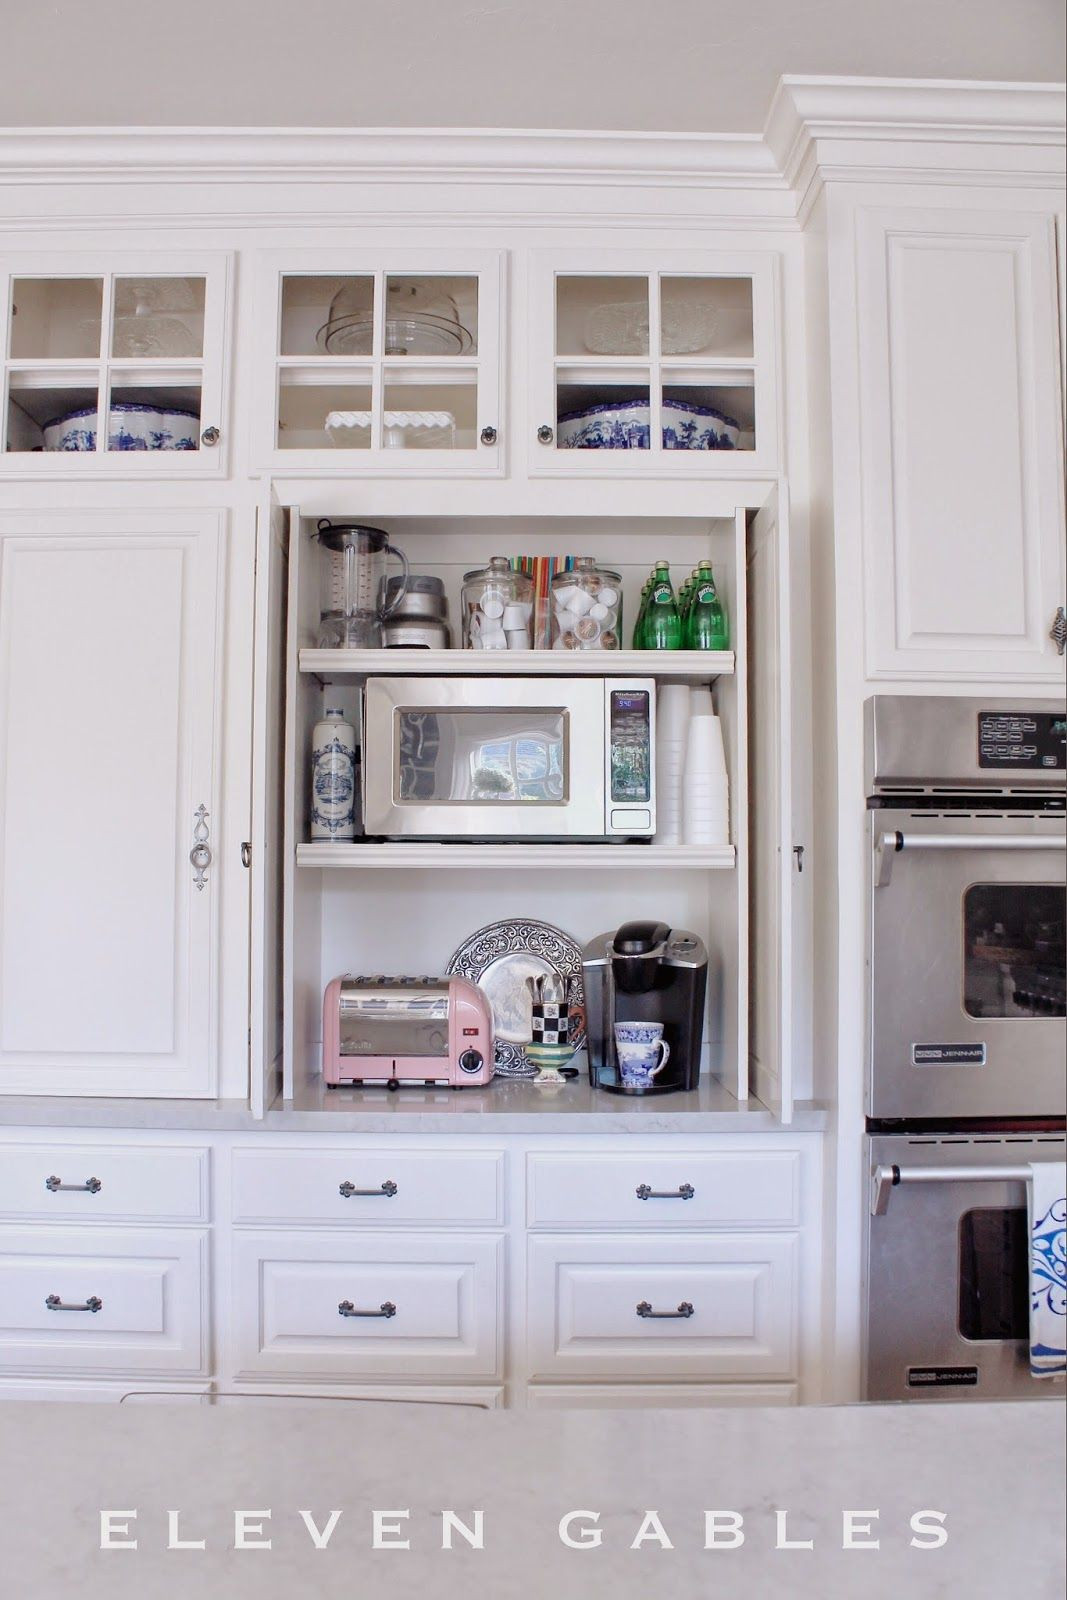 Kitchen Appliances Storage Cabinet
 Hidden Appliance Cabinet and Desk mand Center in the